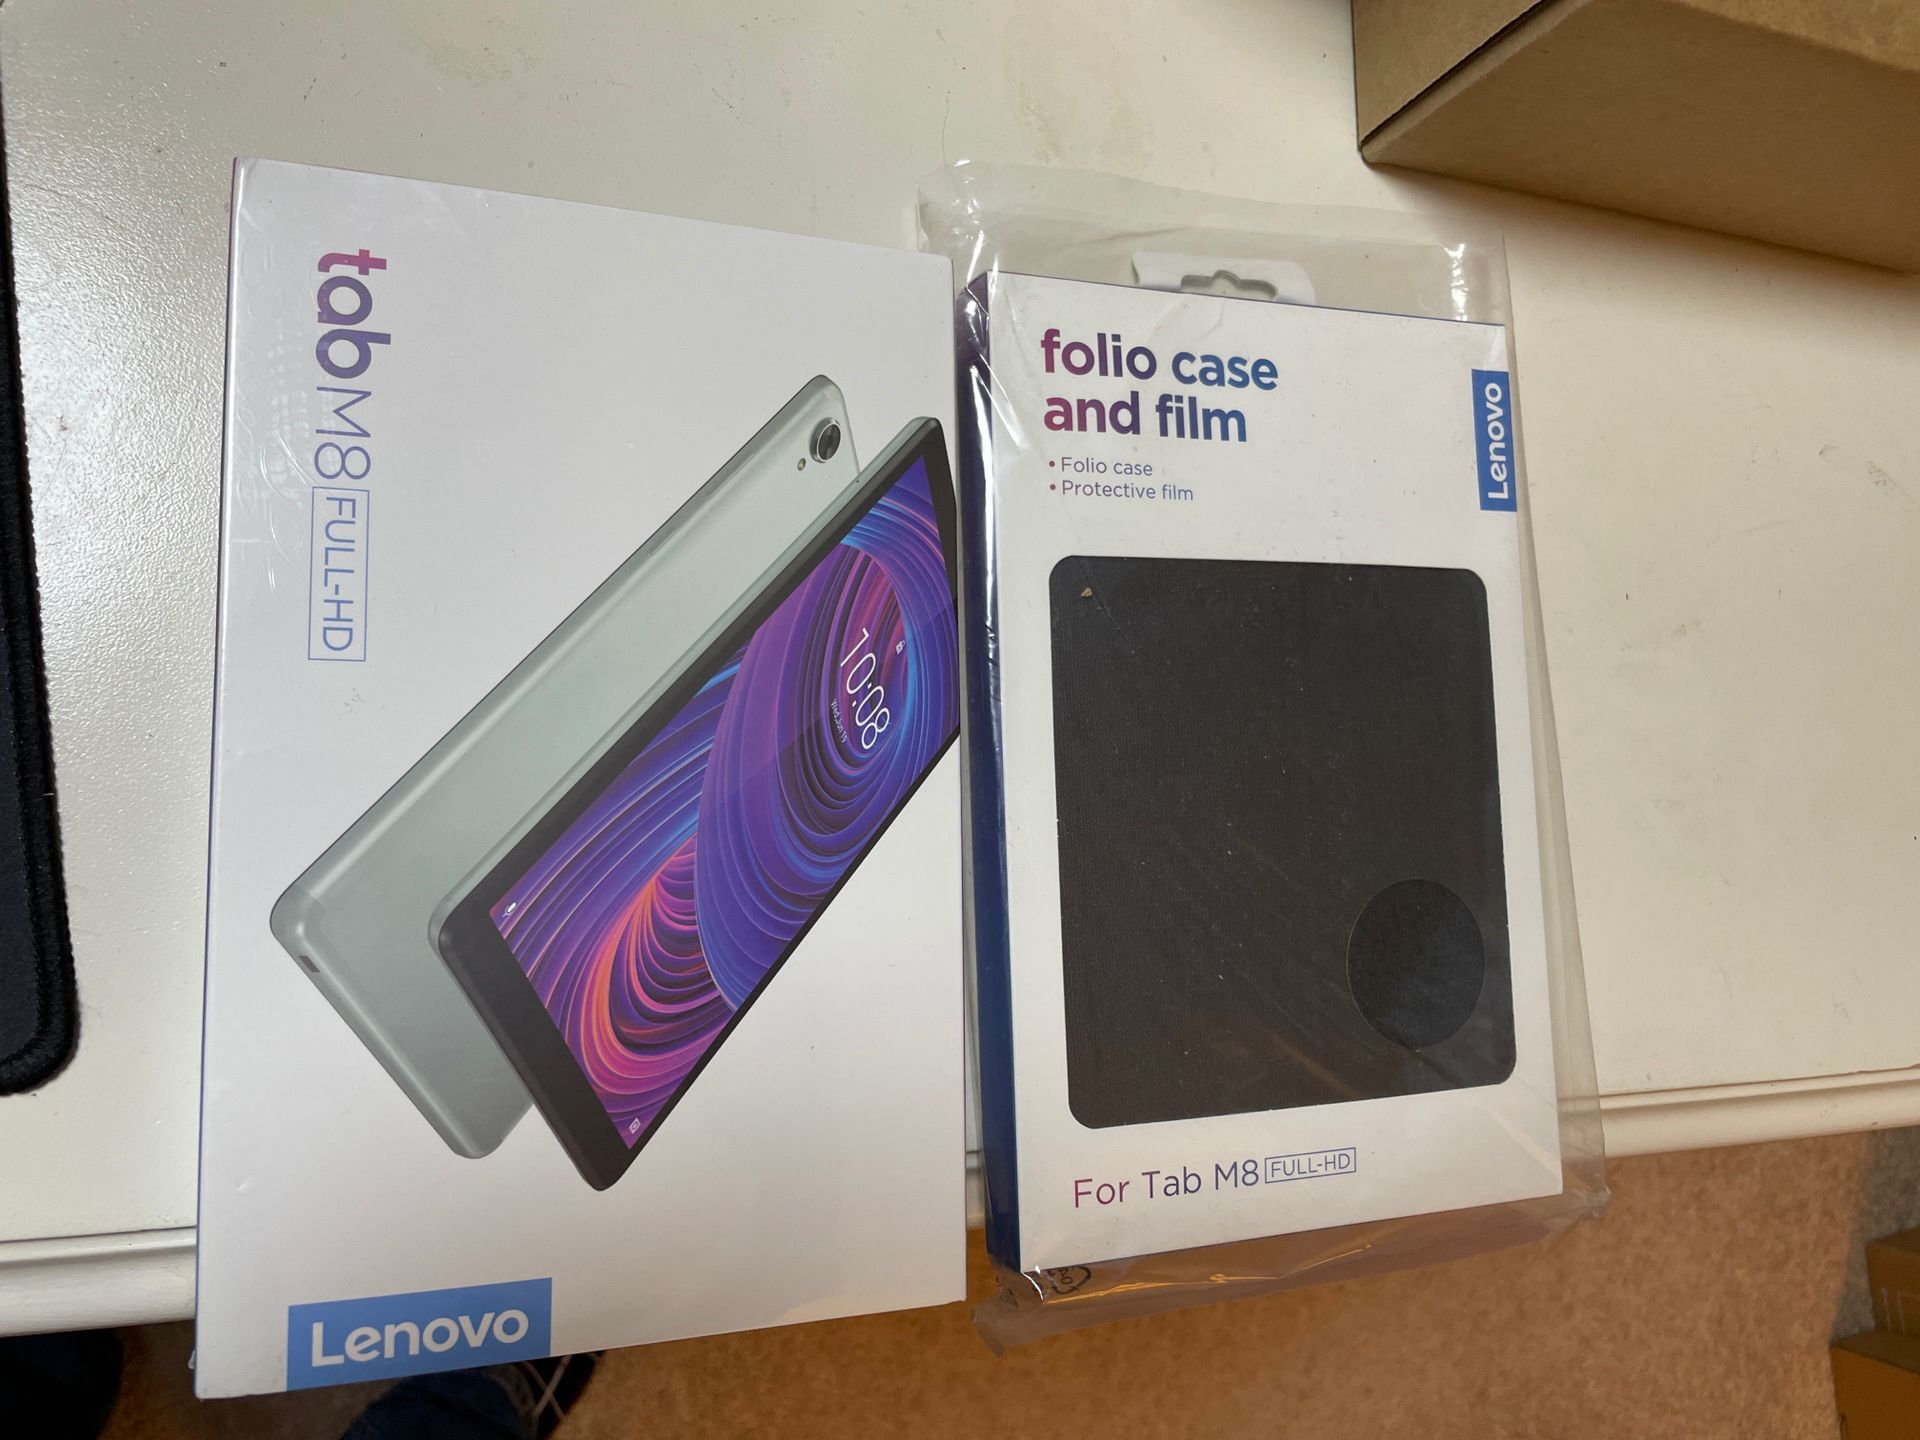 Brand New Lenovo Tab M8 32GB Android Tablet w/Folio Case